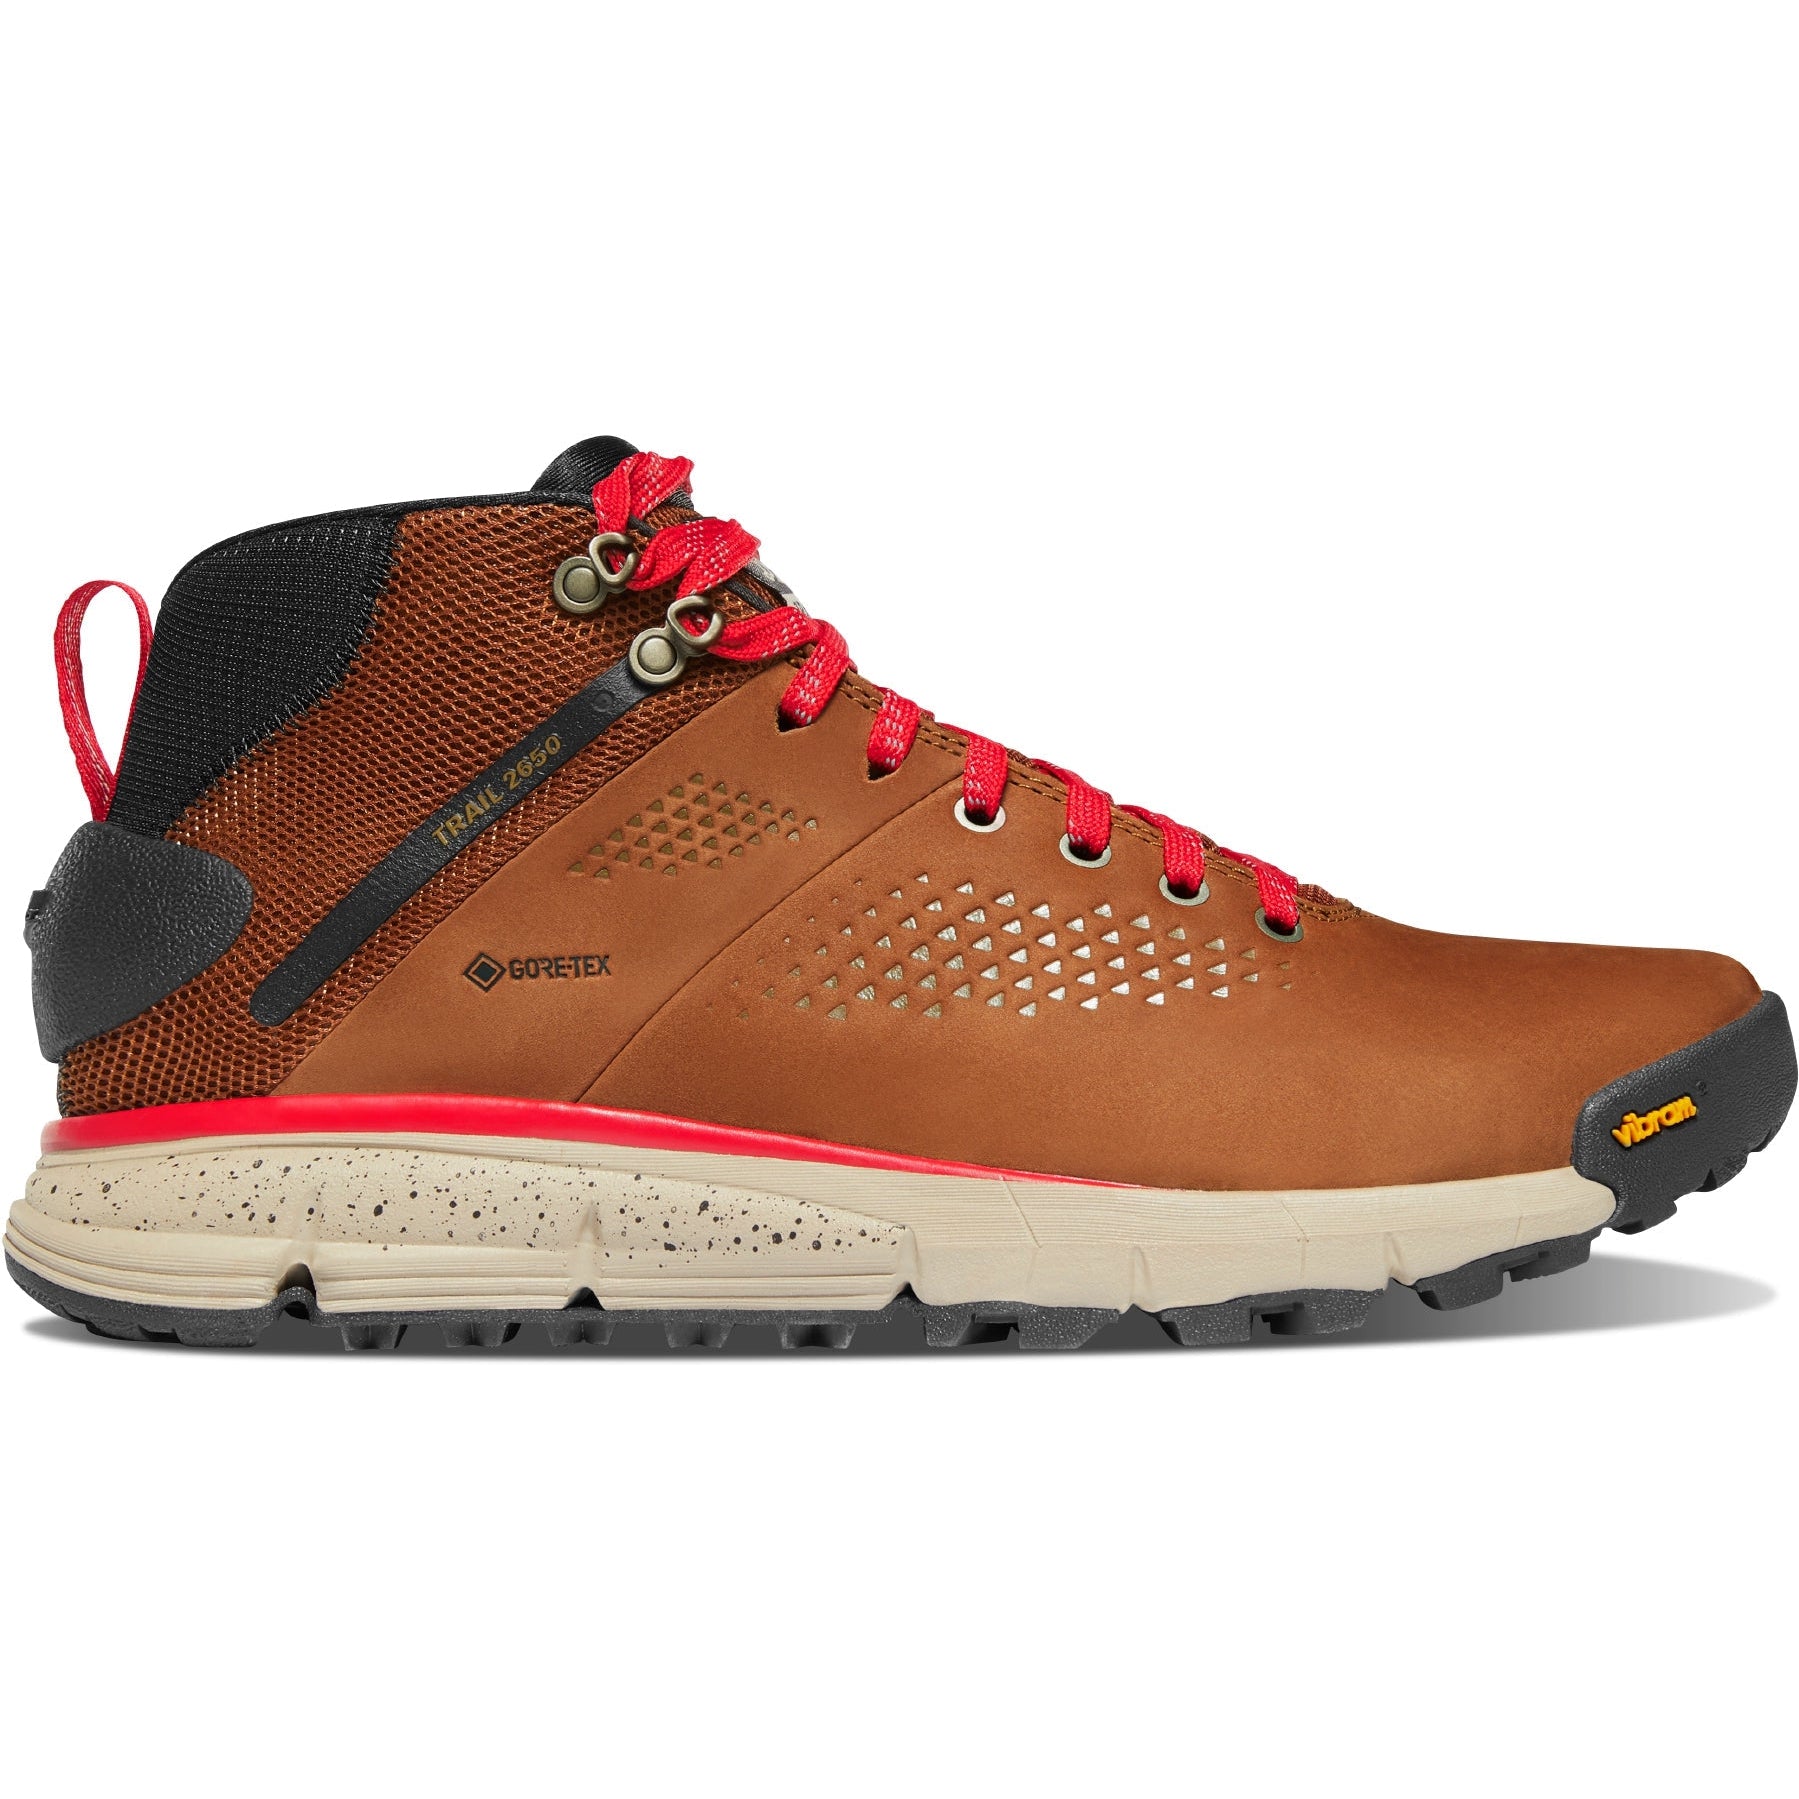 Danner Men's Trail 2650 GTX Mid 4" WP Hiking Shoe - Brown - 61249  - Overlook Boots